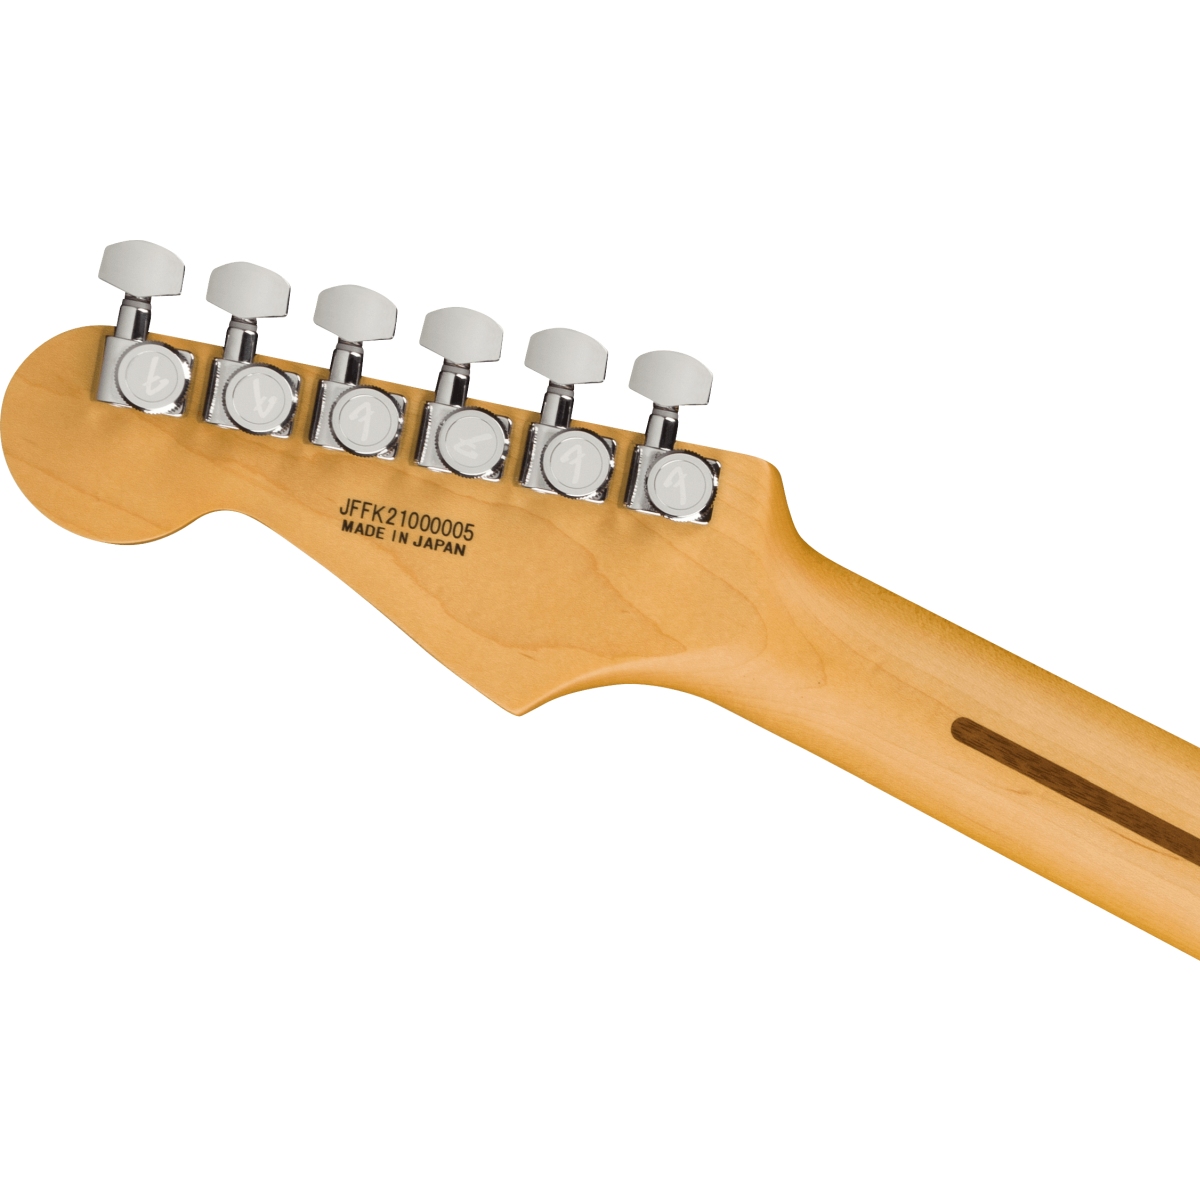 Fender / Aerodyne Special Stratocaster HSS Rosewood Fingerboard